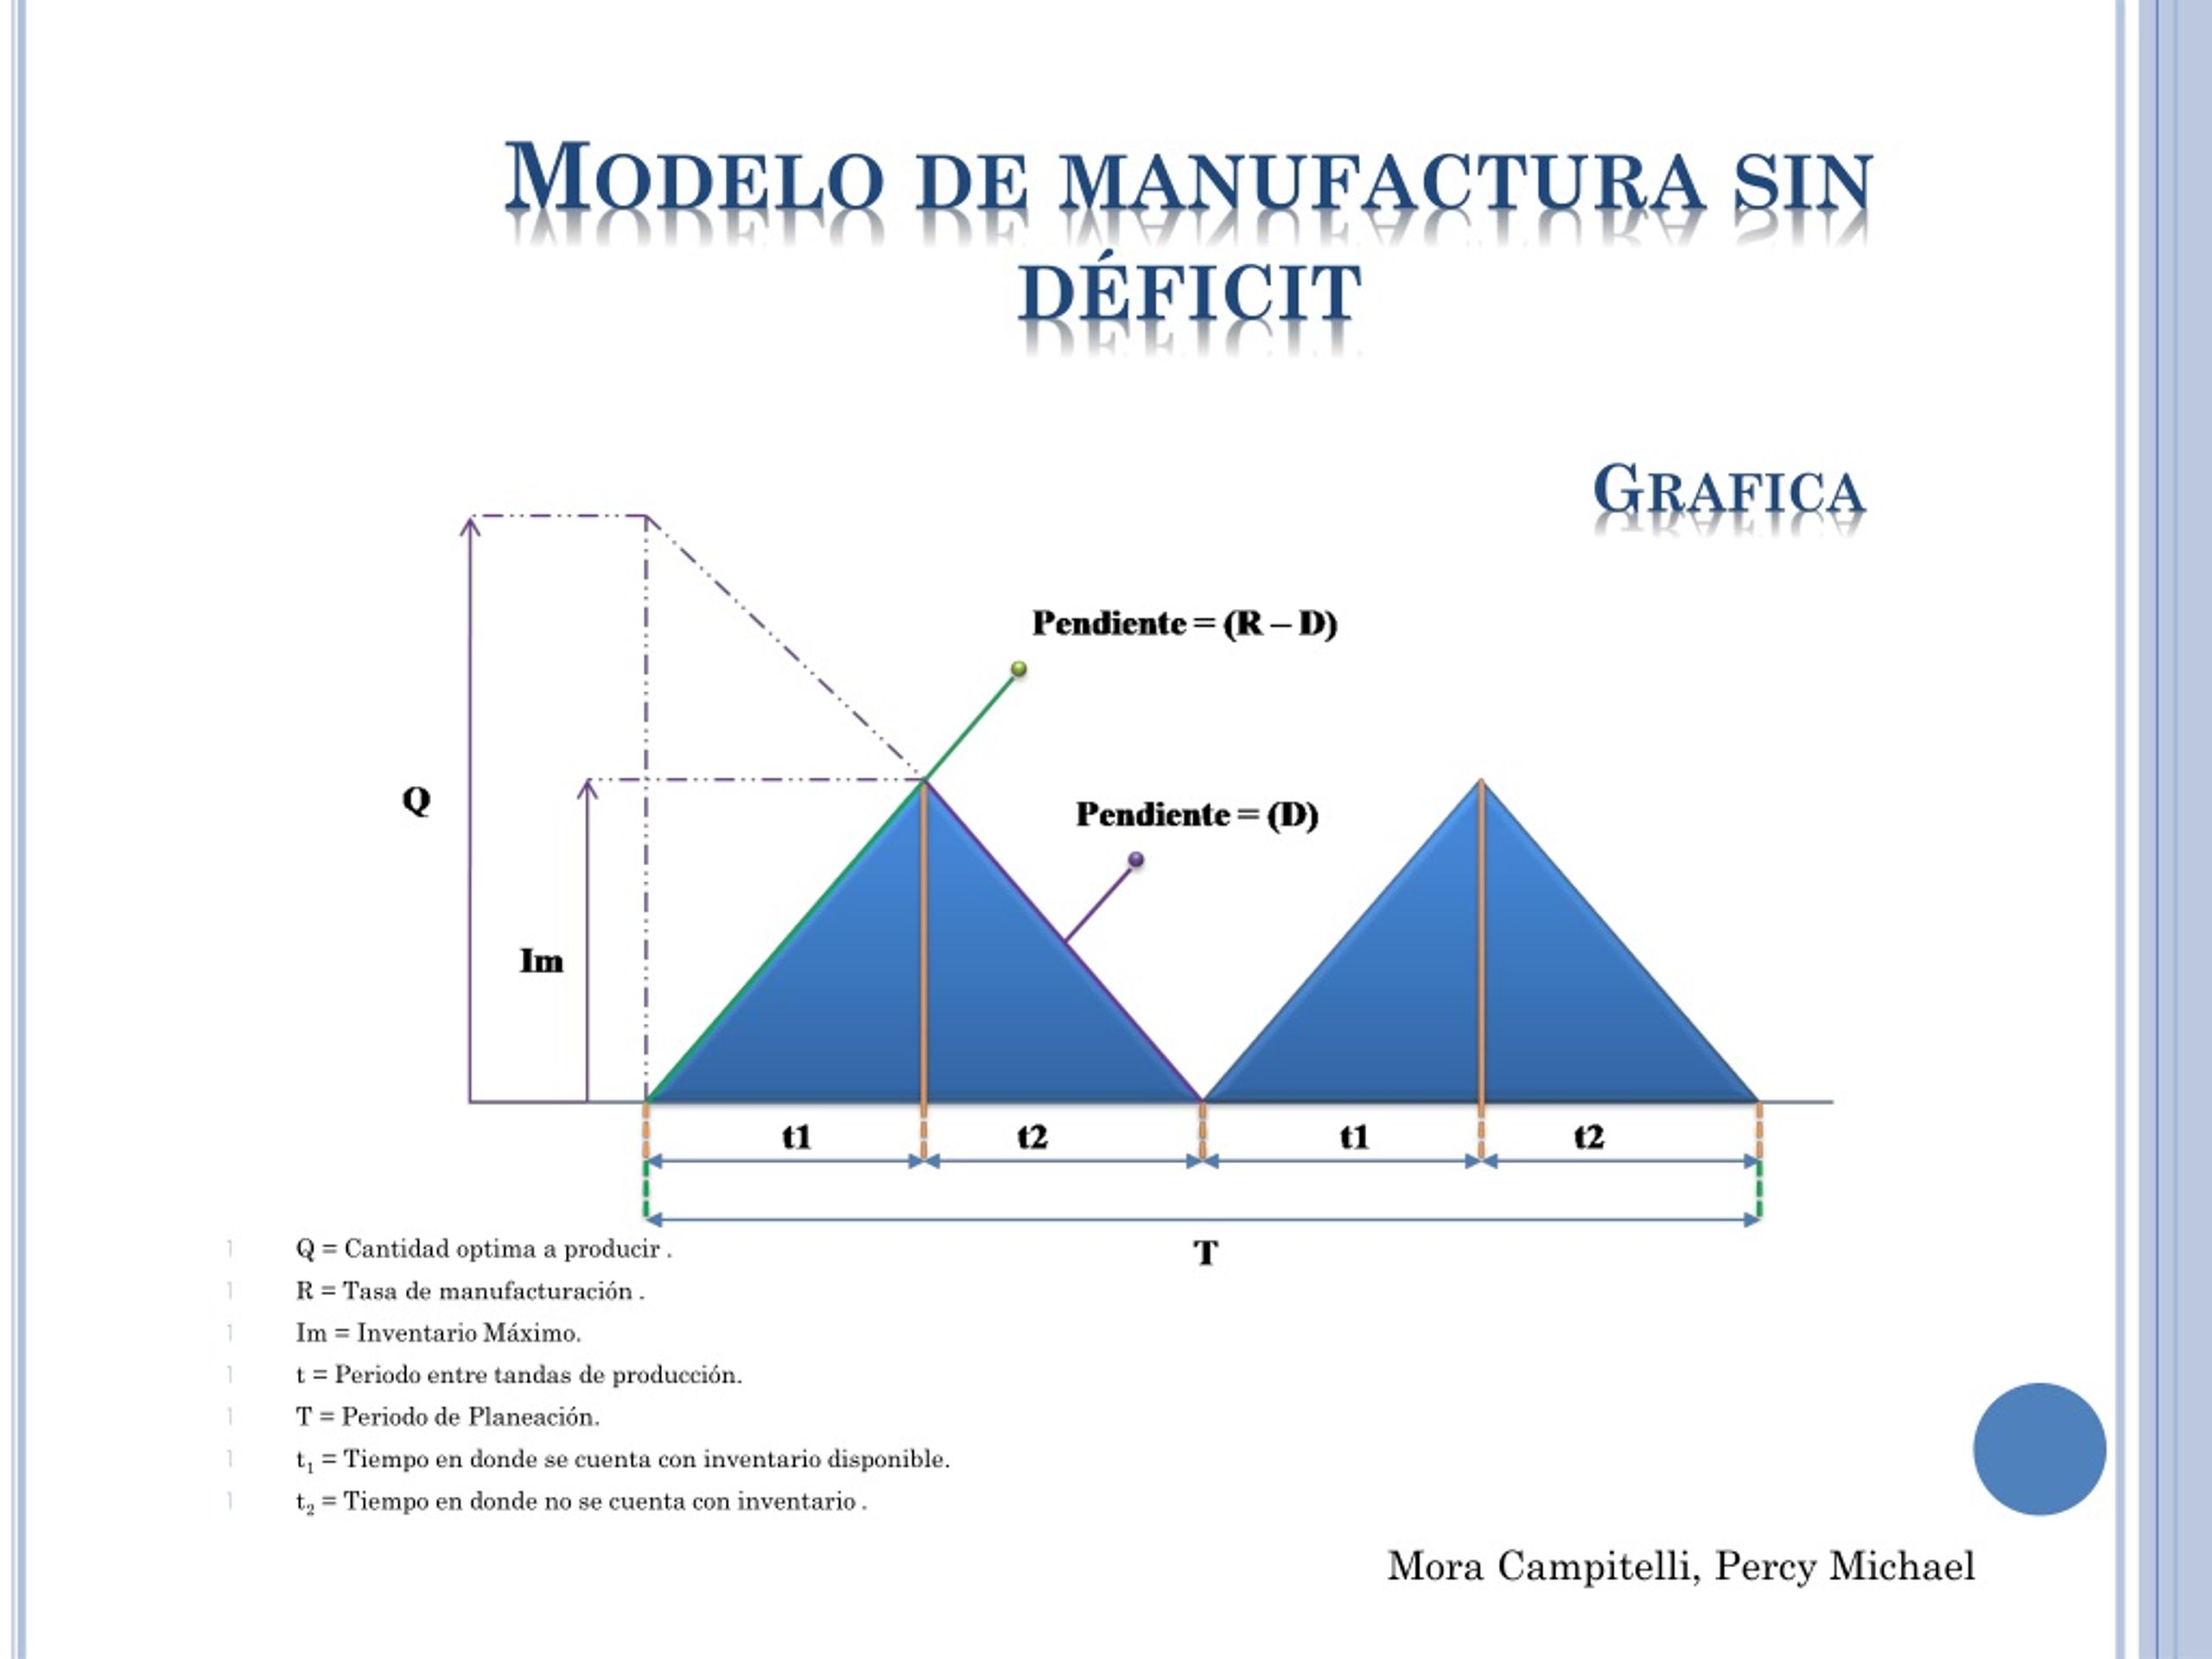 PPT - Modelo de manufactura sin deficit PowerPoint Presentation, free  download - ID:12605